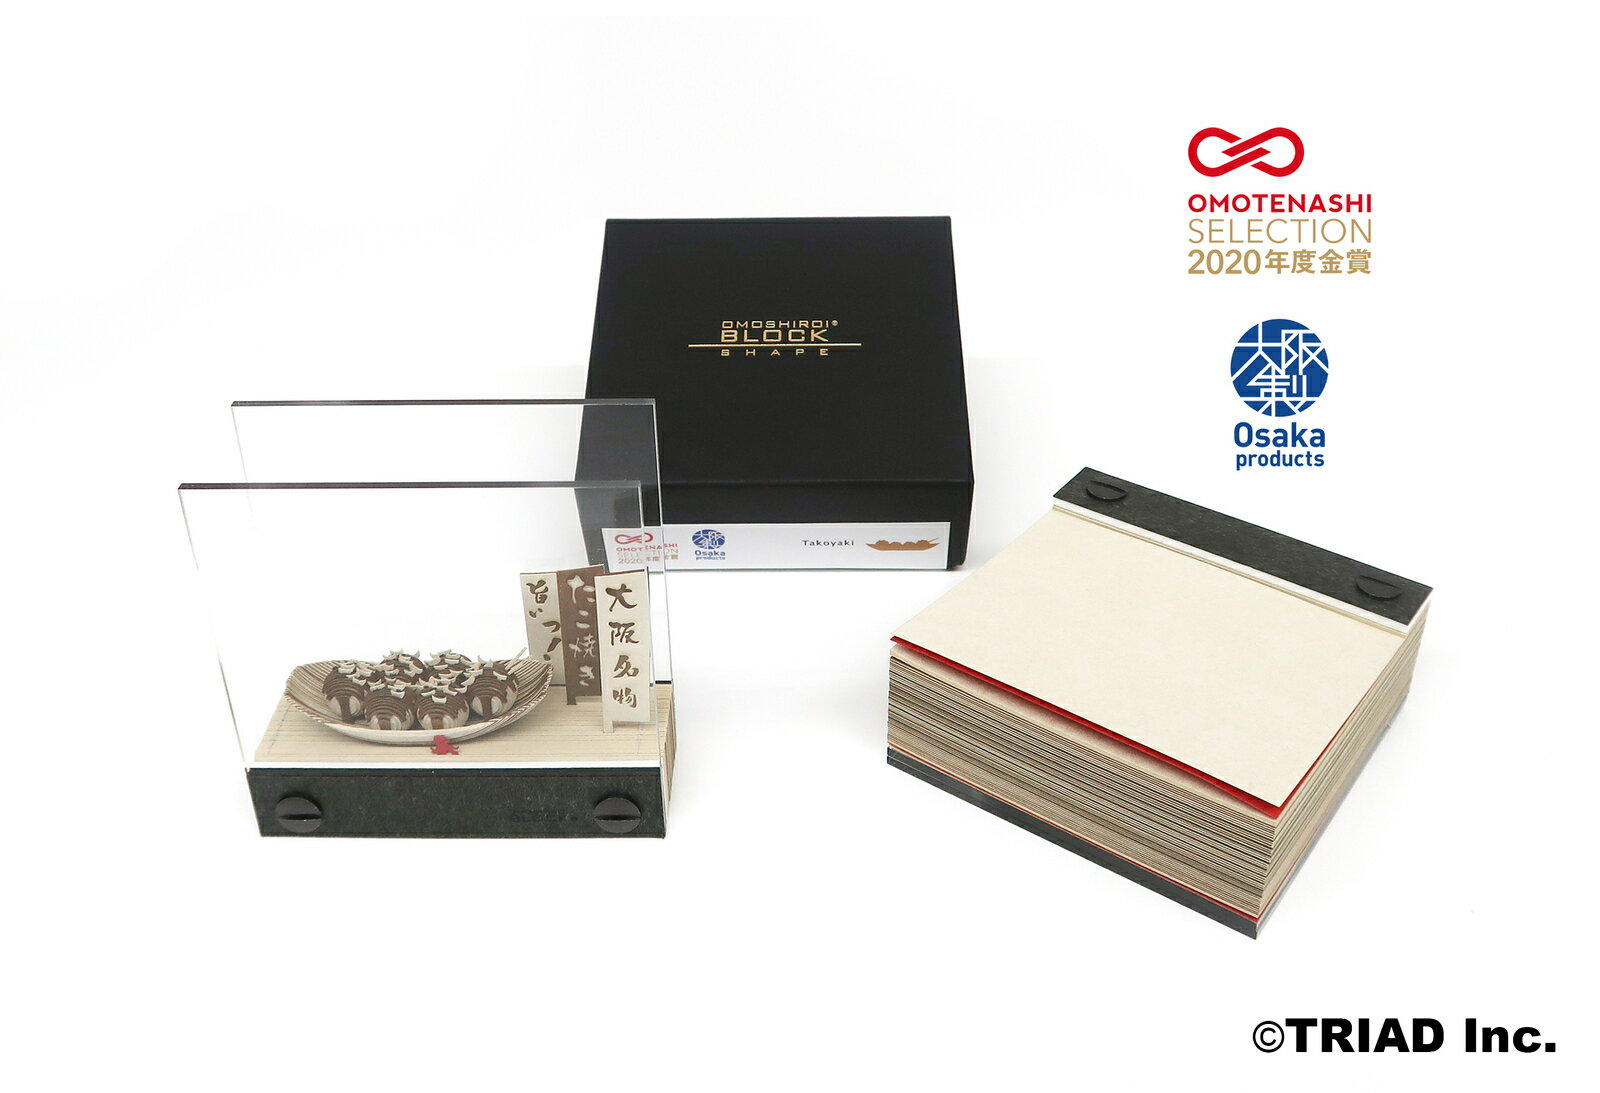 Takoyaki 公式 OMOSHIROIBLOCK メモ帳 立体メモ 収納ケース付き 飾り物 インテリア プレゼント